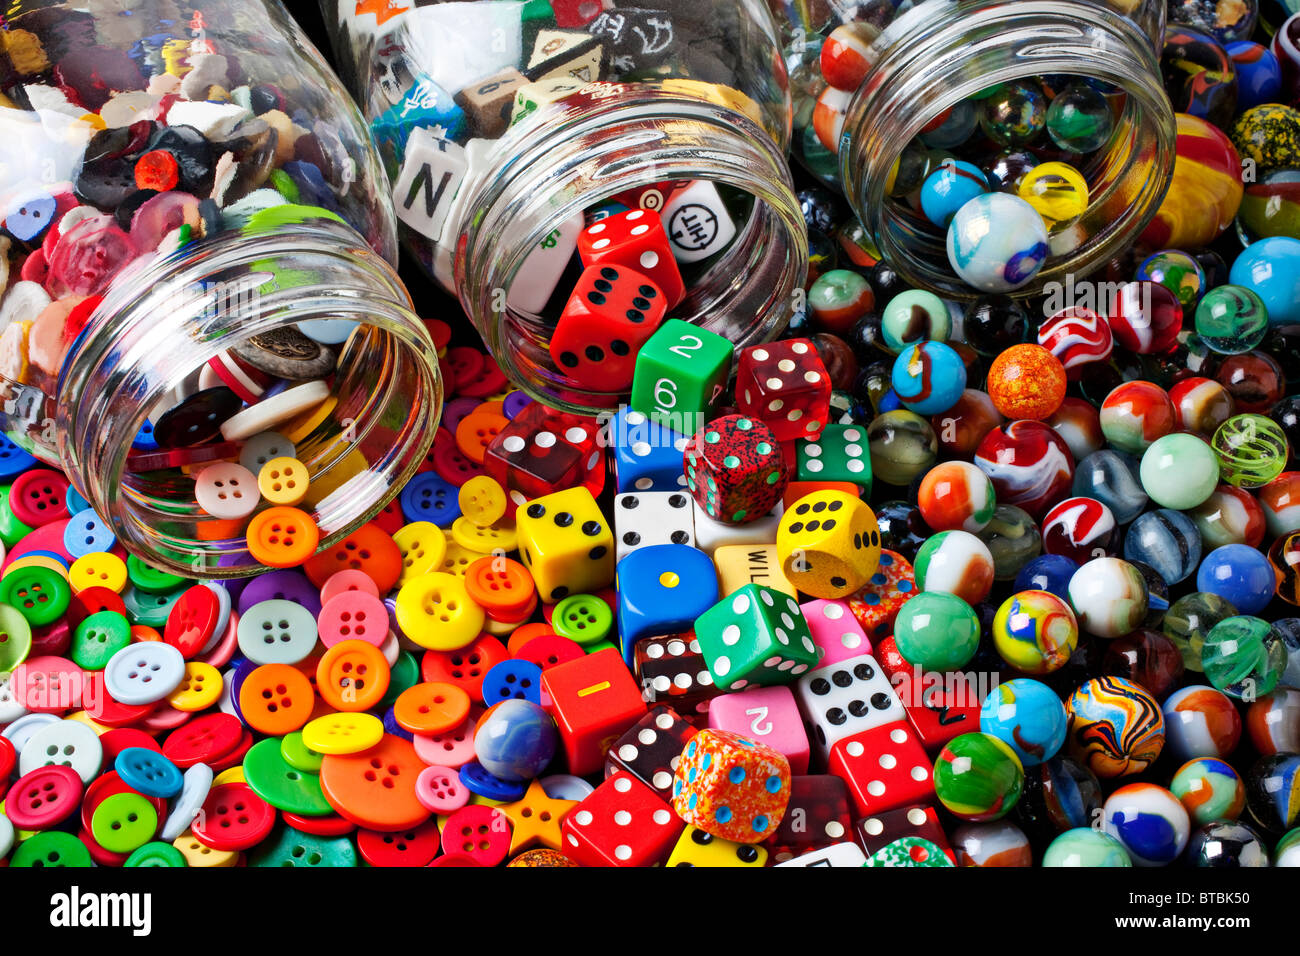 https://c8.alamy.com/comp/BTBK50/three-jars-of-buttons-dice-and-marbles-BTBK50.jpg